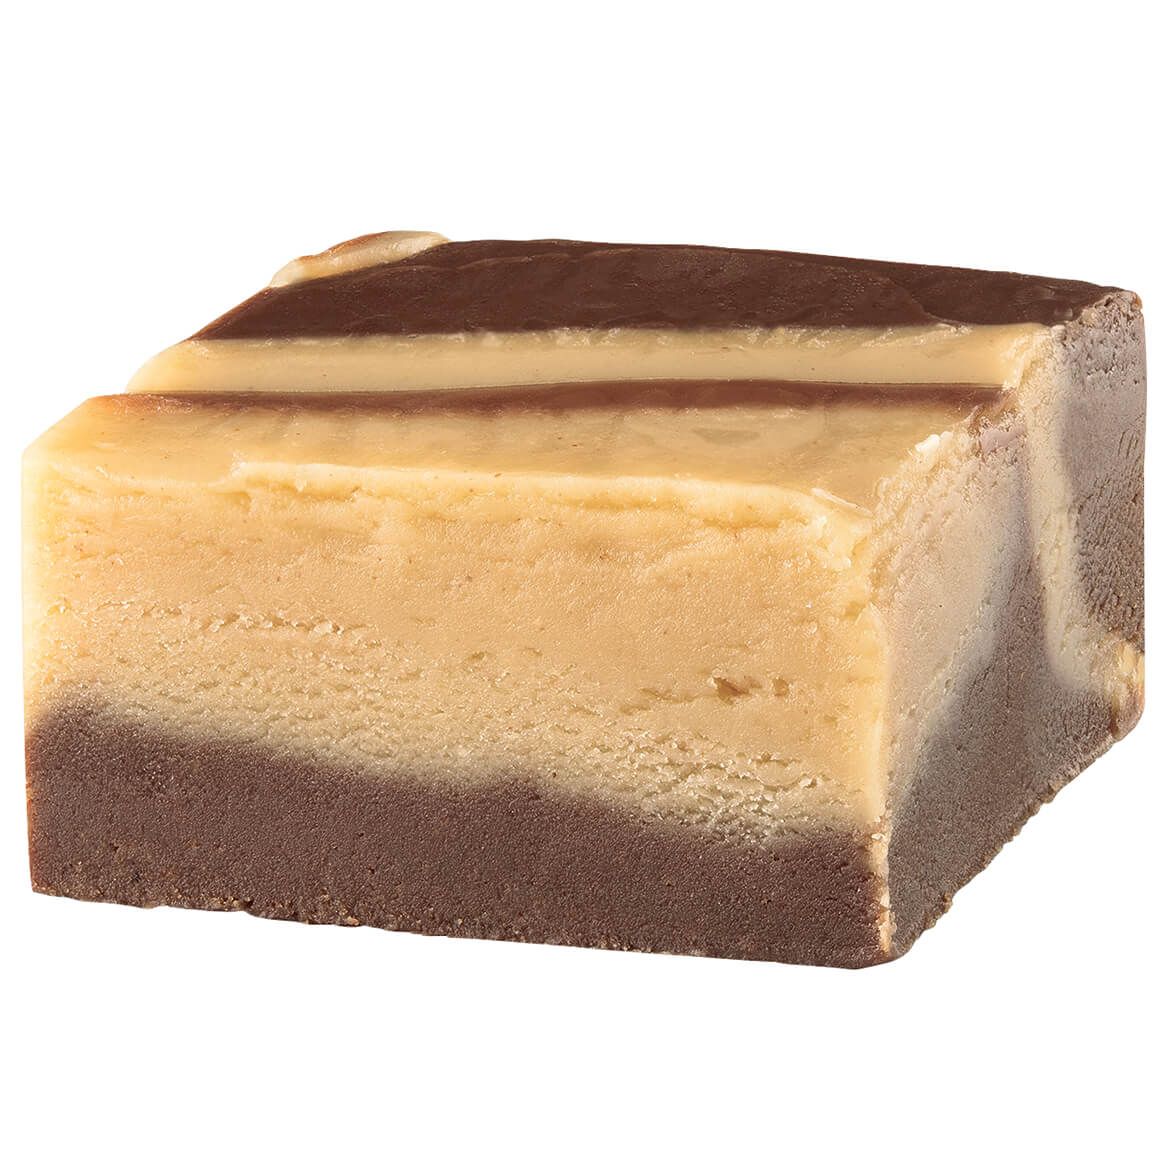 Mrs. Kimball's Chocolate Peanut Butter Fudge, 12 oz. + '-' + 374421